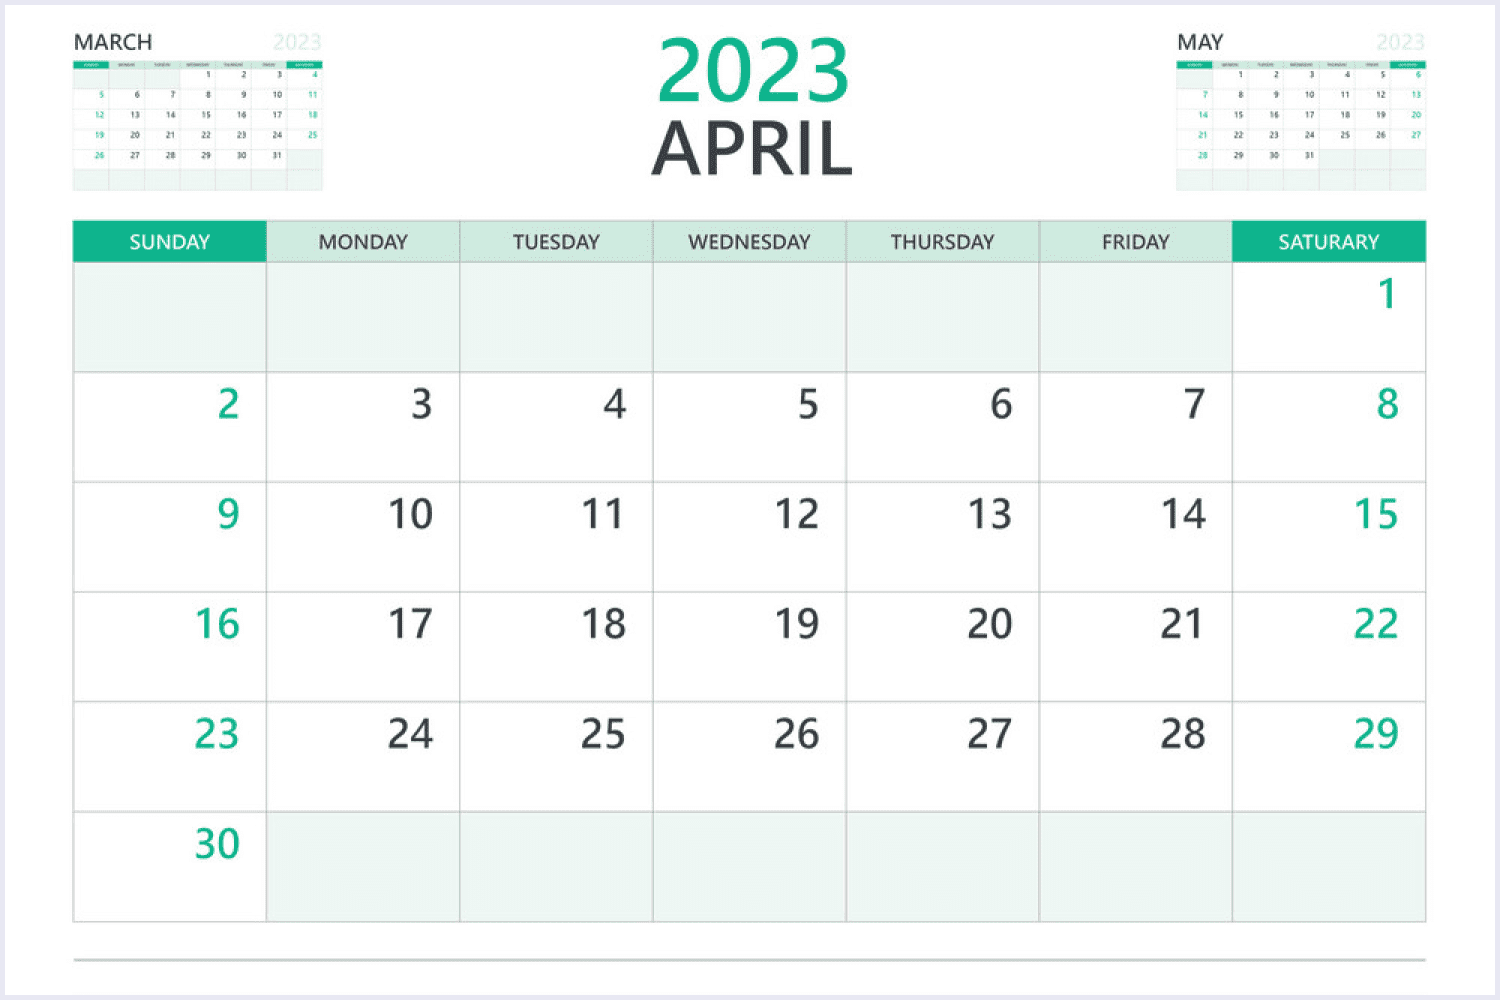 Calendar for April 2023 in green colors.